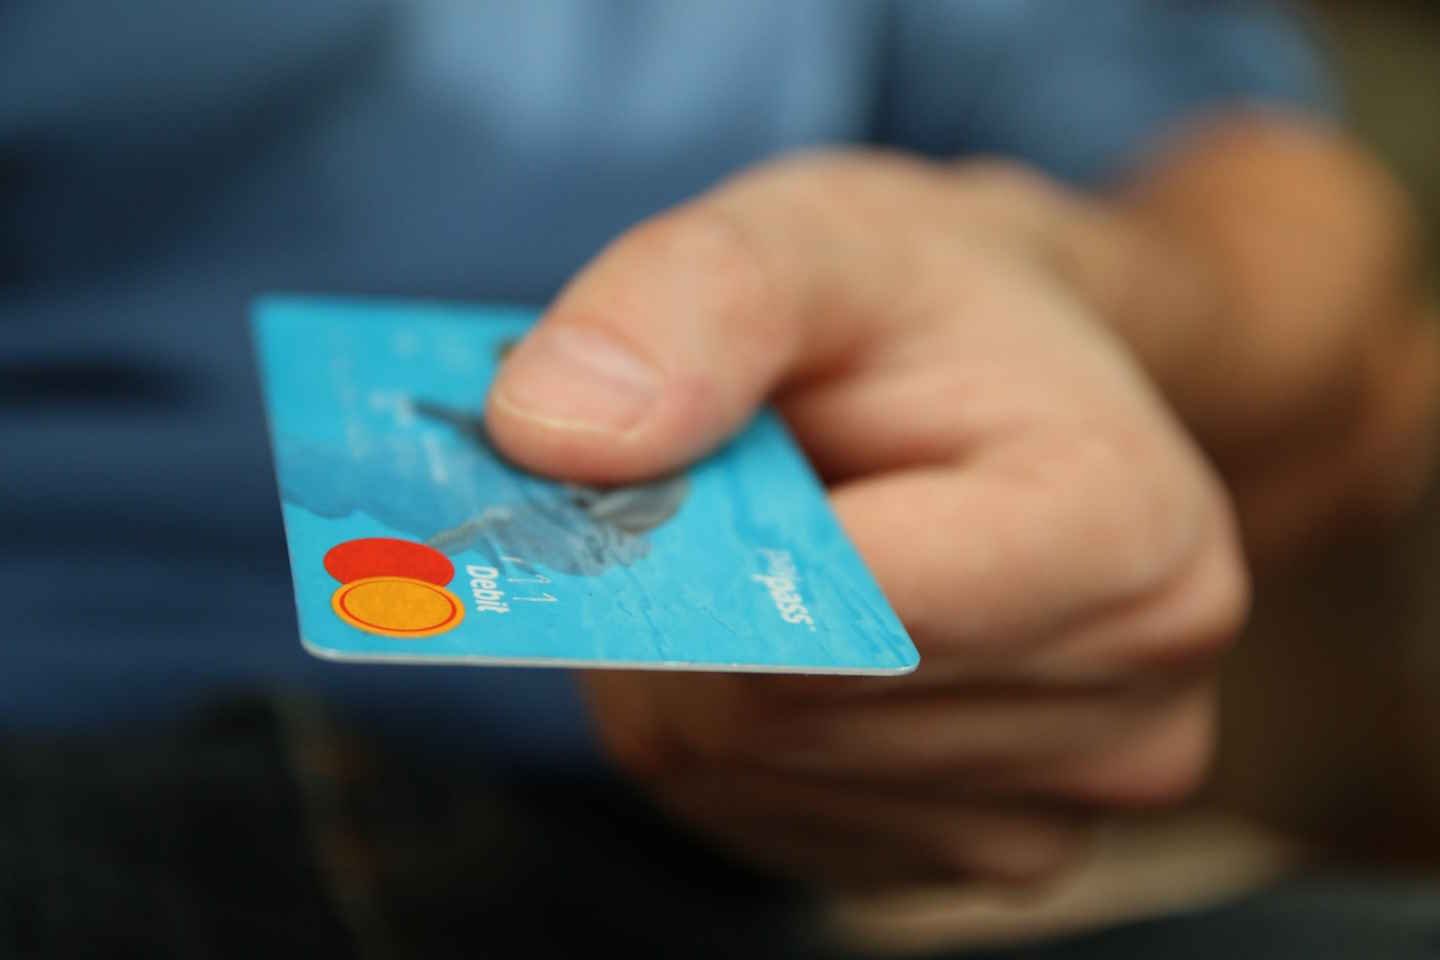 Новости Казахстана / Общество в Казахстане / В Казахстане хотят ввести наказание за передачу банковских и SIM-карт